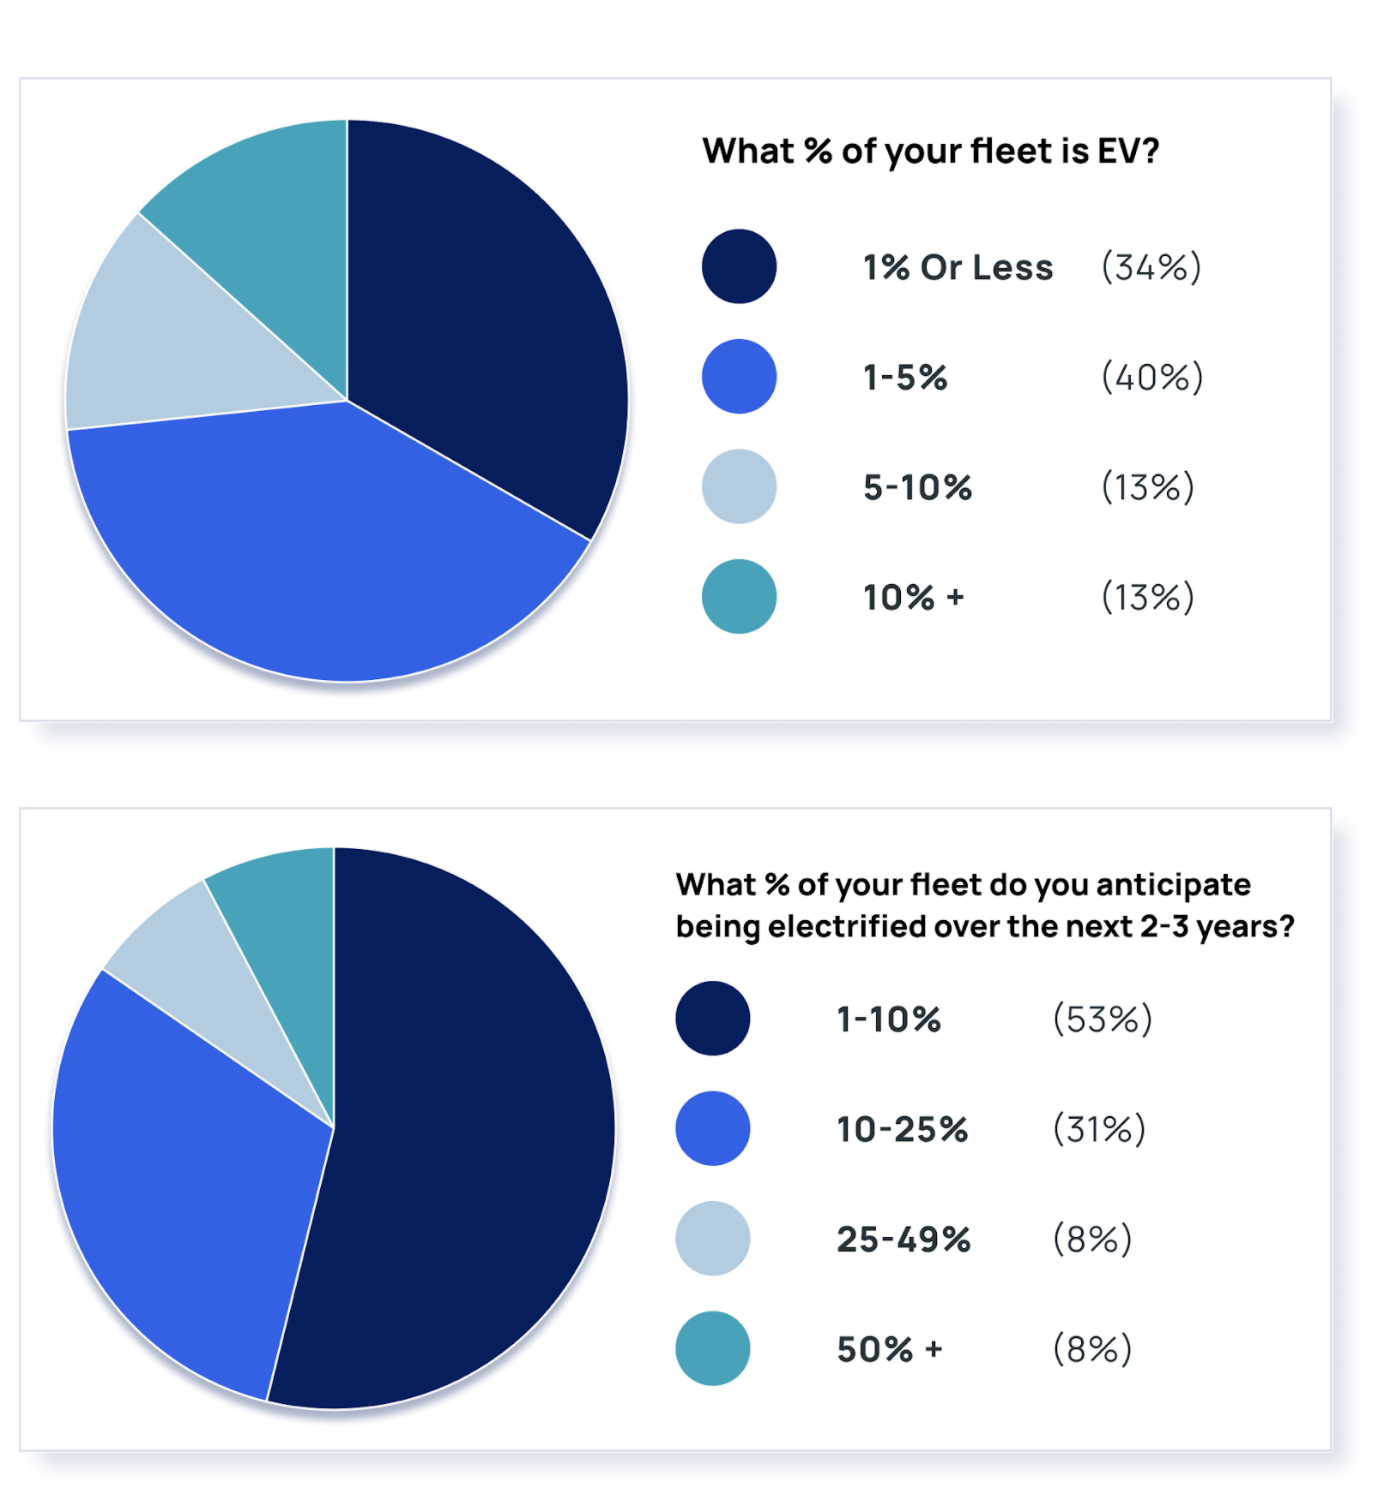 ev fleet percentages